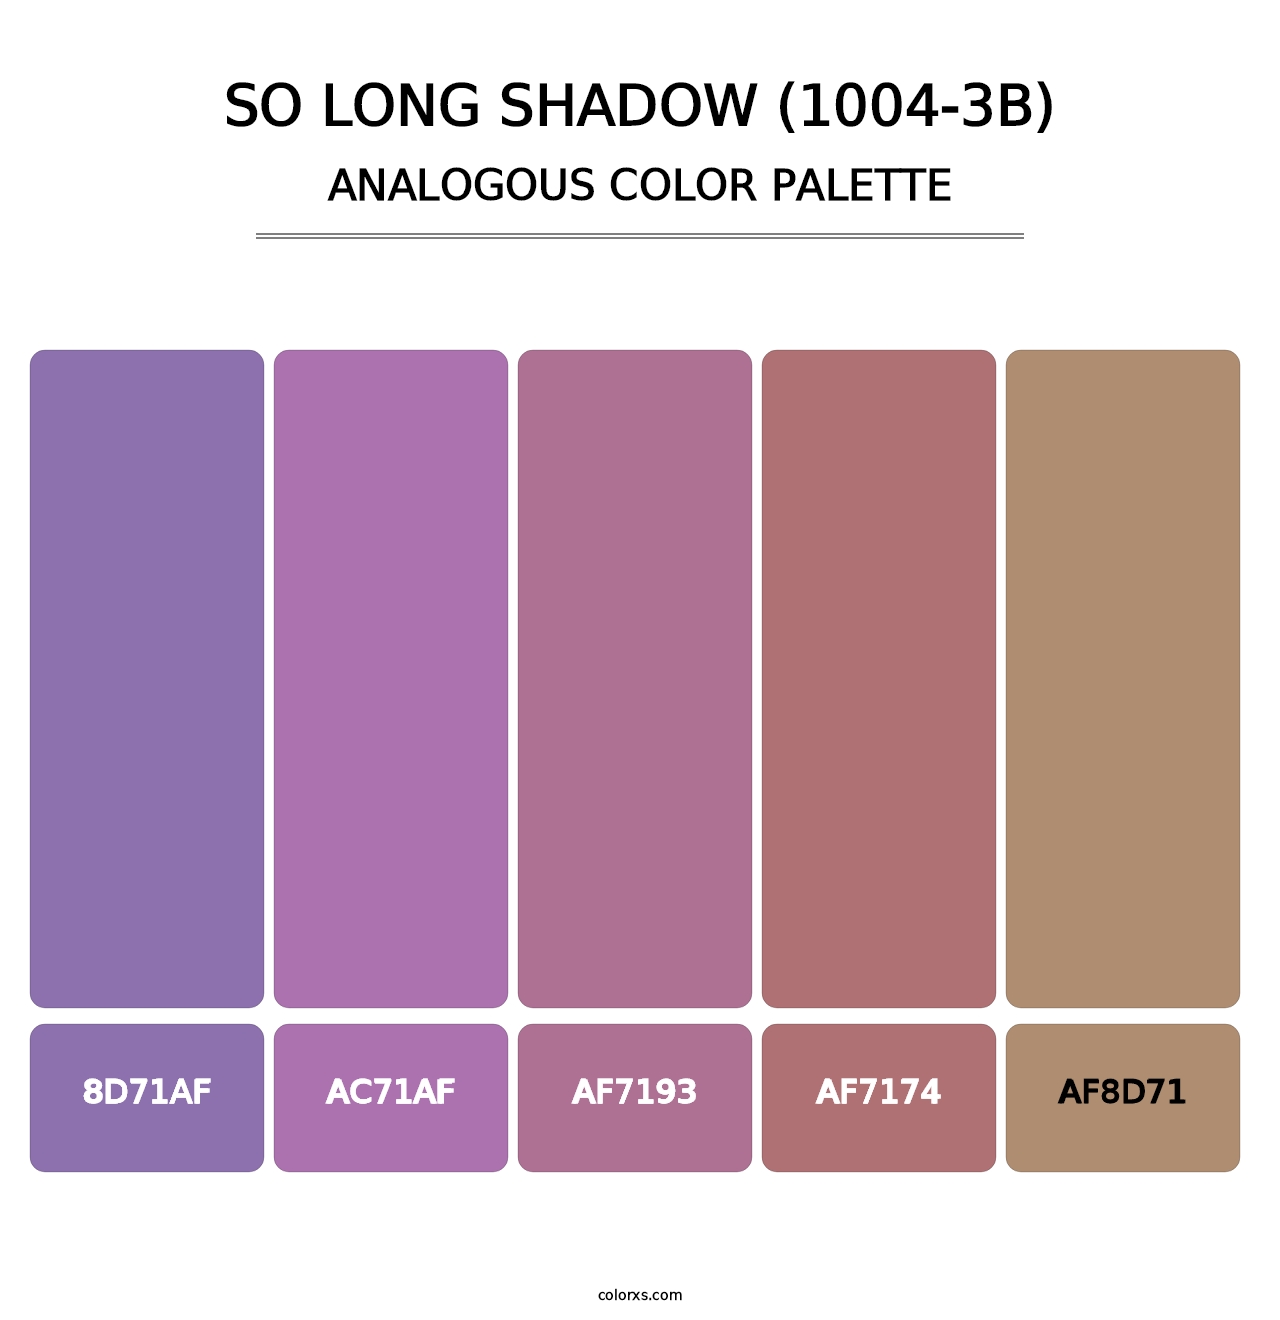 So Long Shadow (1004-3B) - Analogous Color Palette